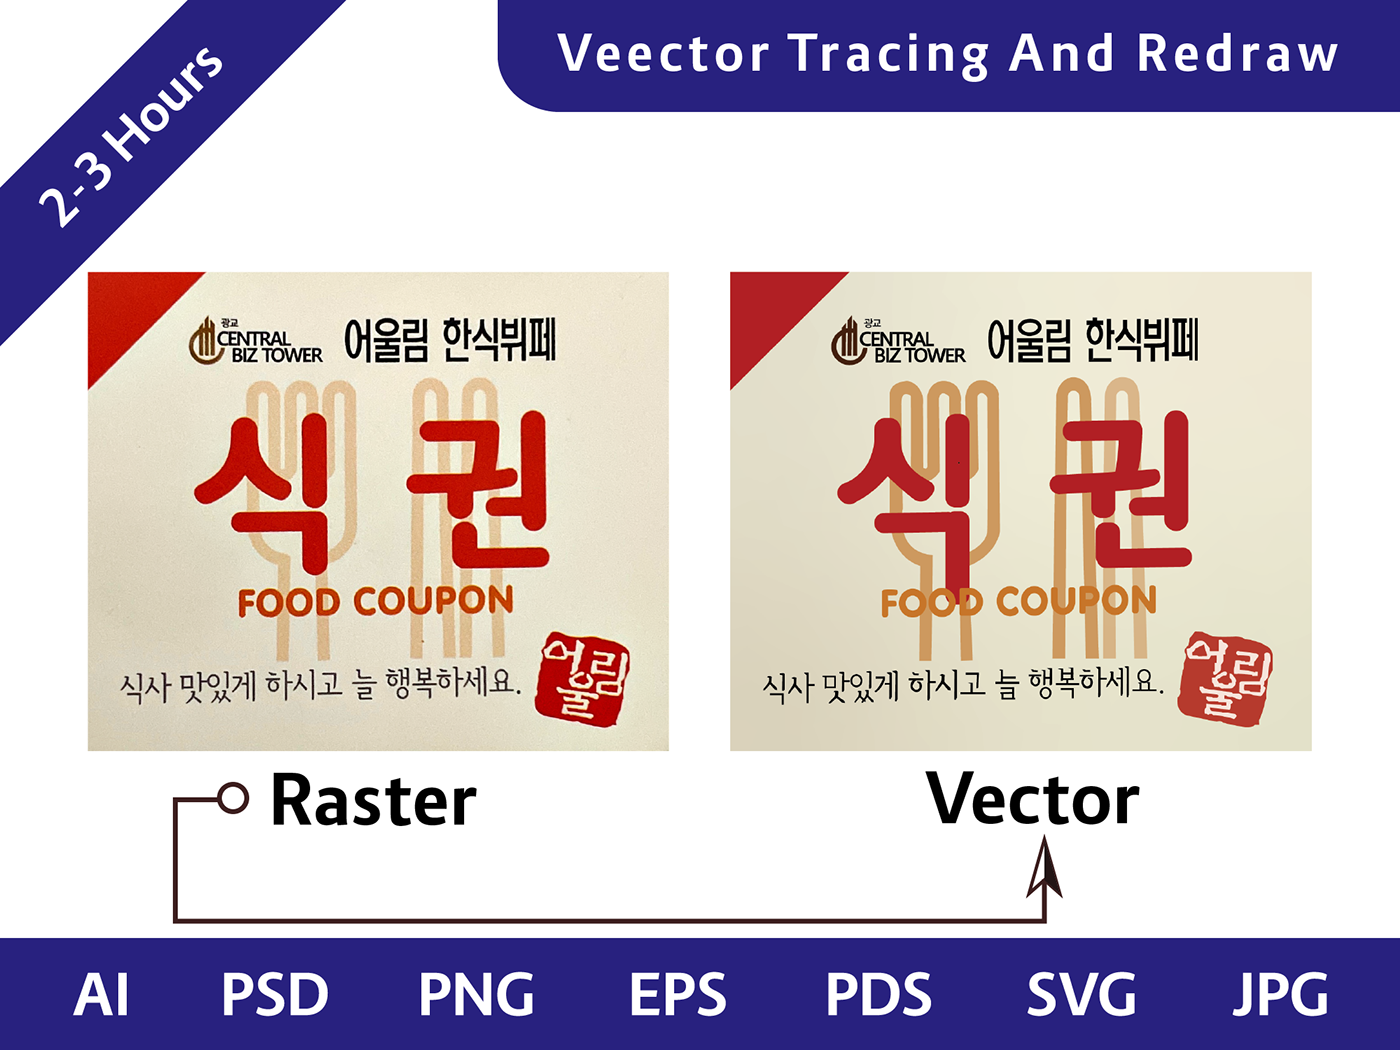 adobe illustrator business card design COUPON coupon design vector vector art Vector Illustration vectorart vectors